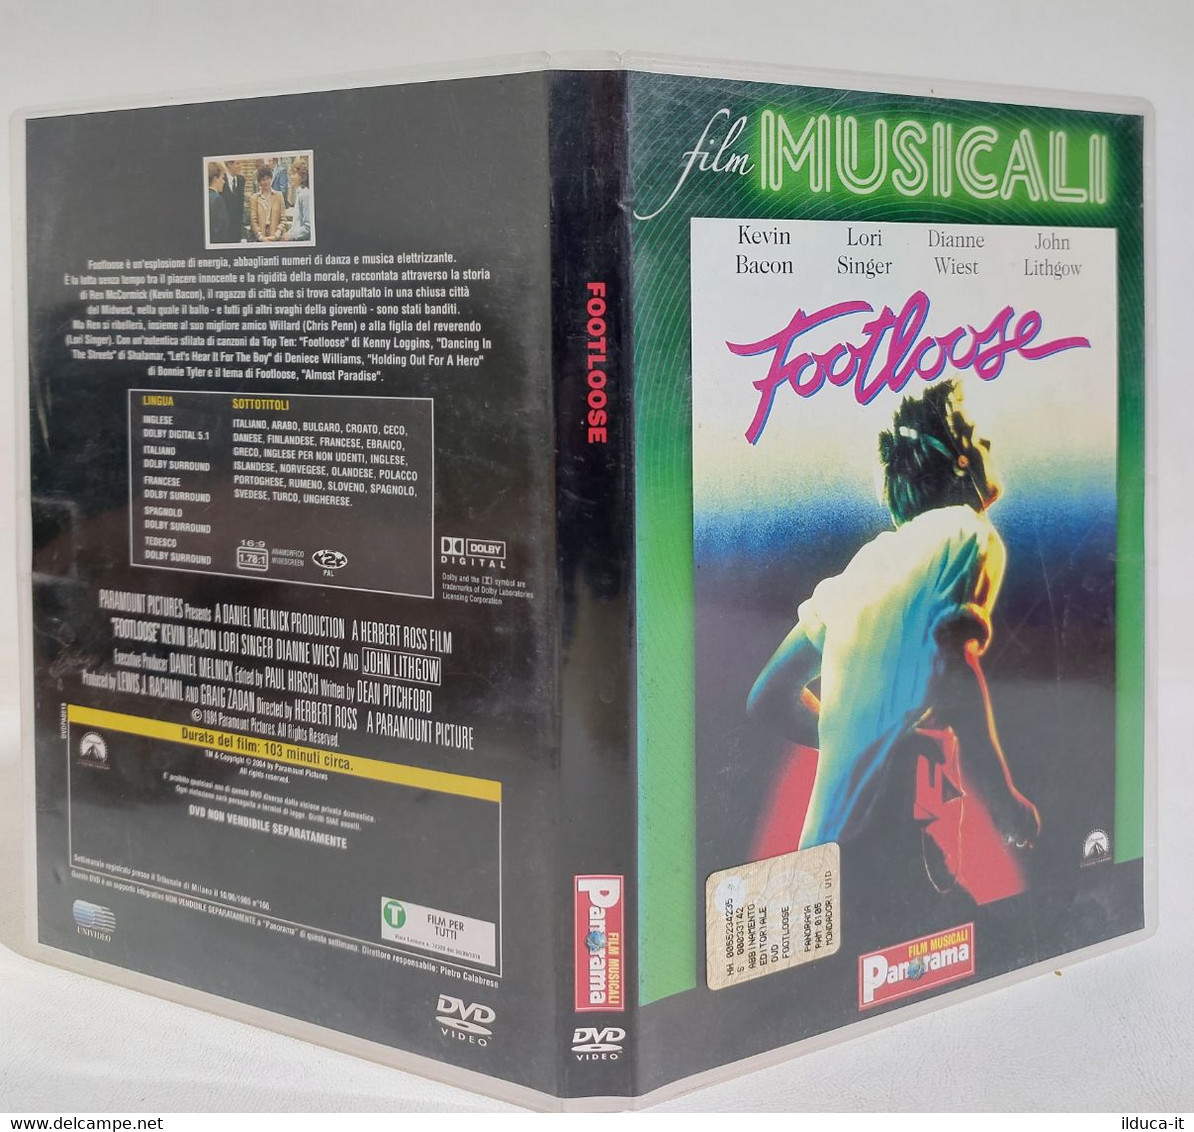 I108655 DVD - FOOTLOOSE (1984) - Kevin Bacon / Lori SInger - Comédie Musicale